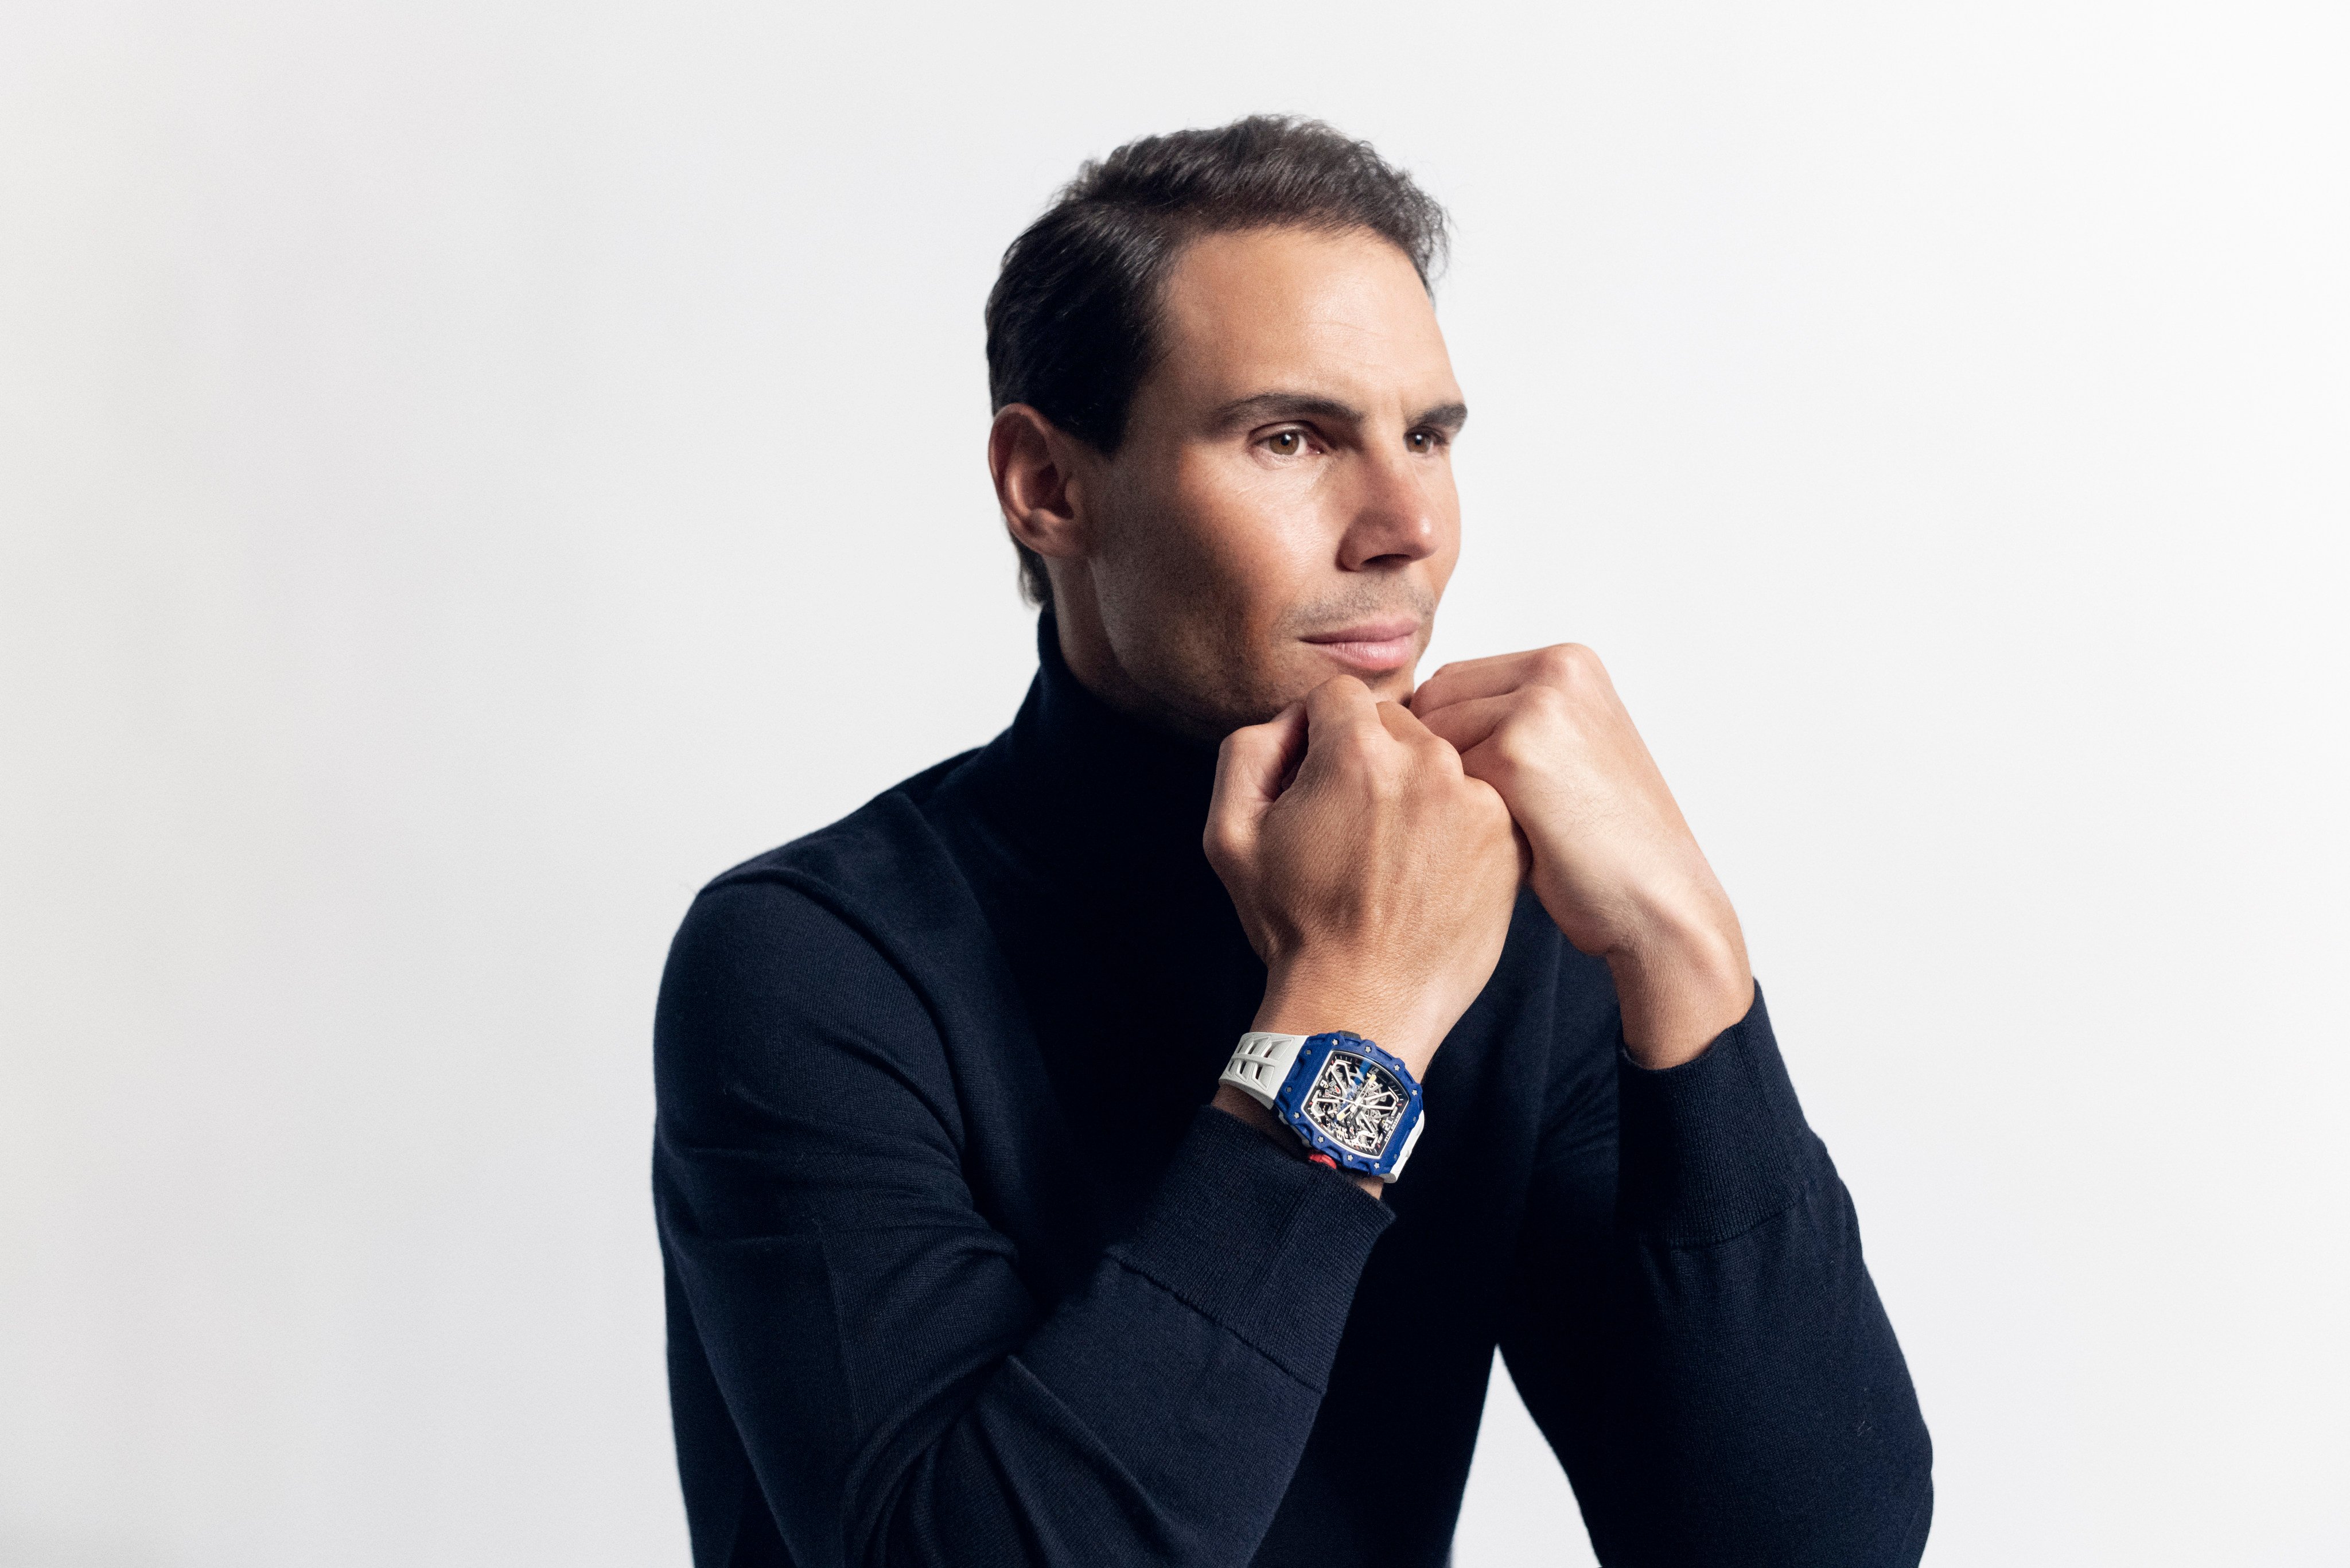 Rafael Nadal has a long-time friendship with Swiss luxury watch brand Richard Mille. Photos: Rafael Nadal